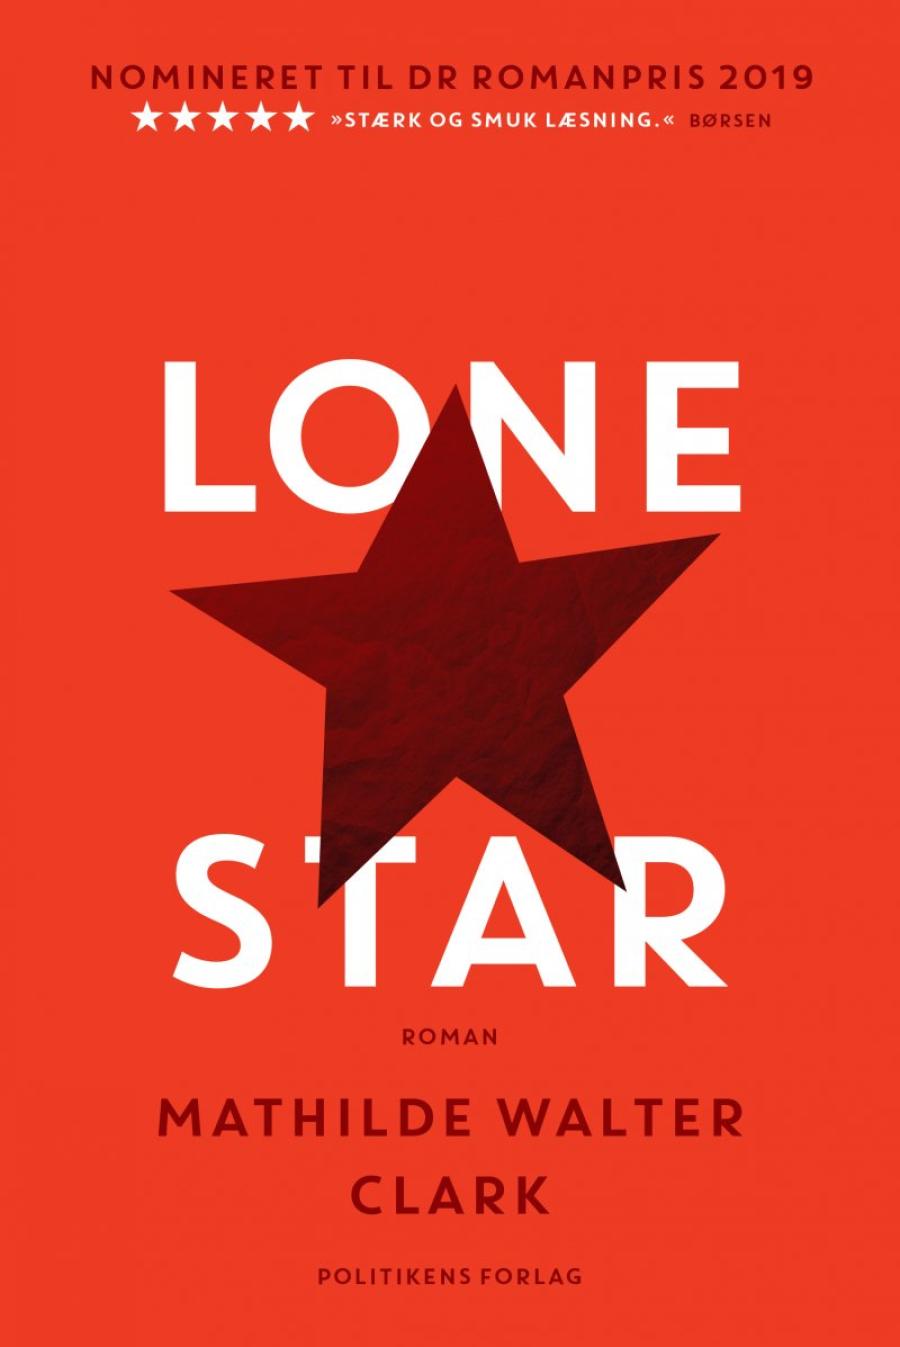 Bente anbefaler romanen Lone Star